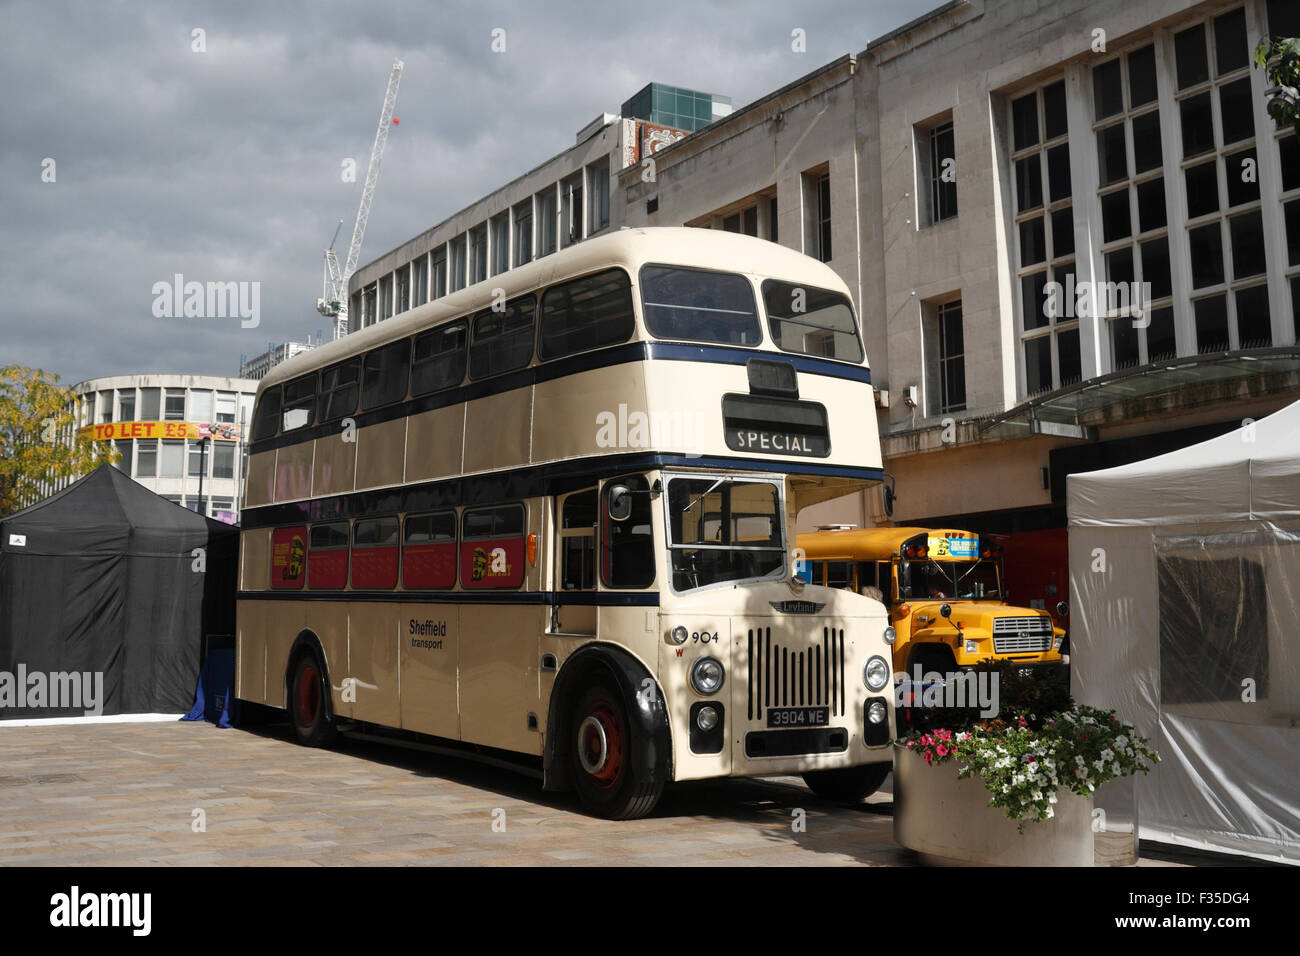 The Mobile University, Old Sheffield Transport Bus, Sheffield England Stock Photo